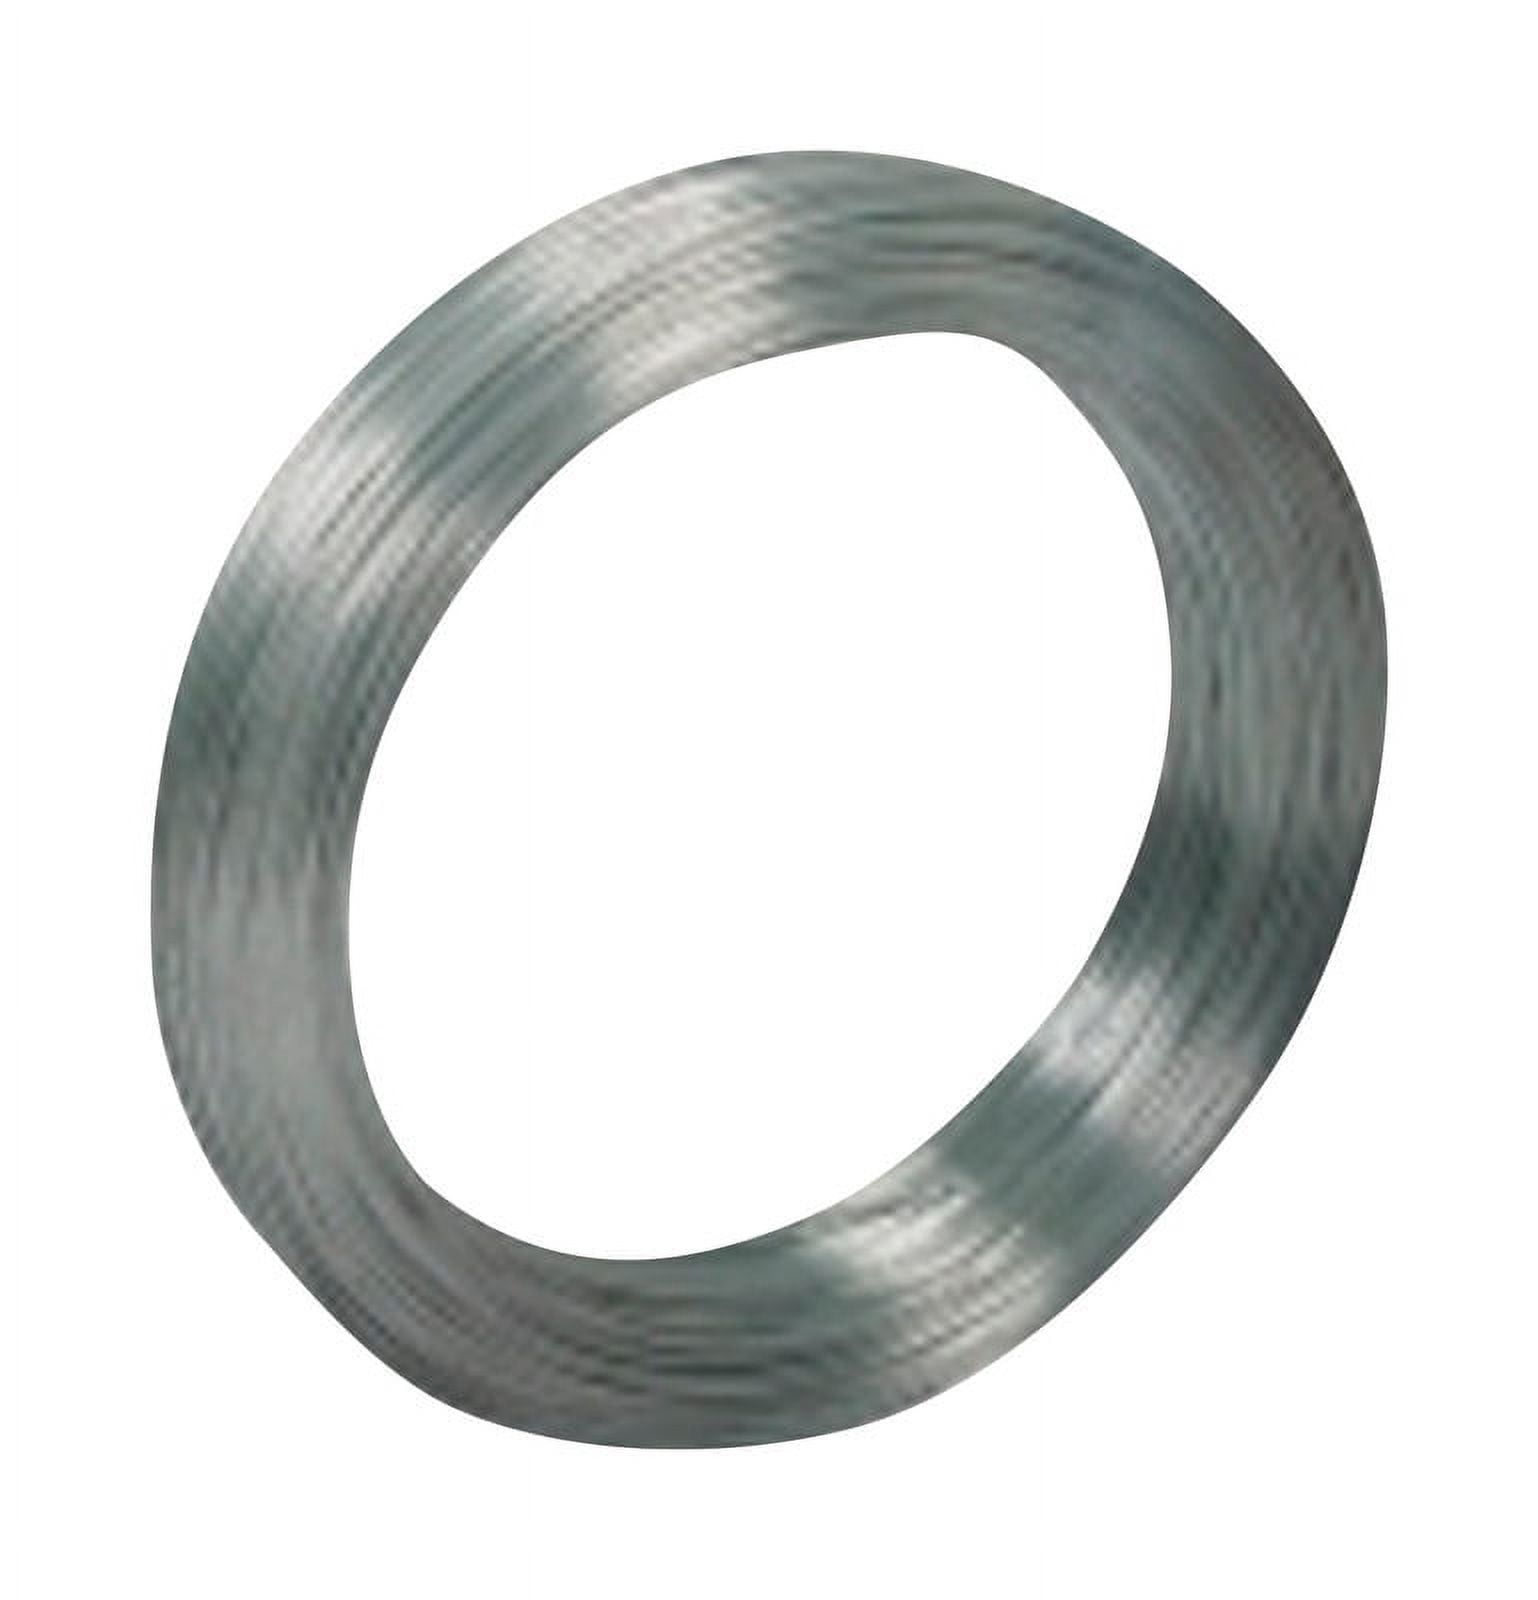 7802184 584 Ft. Galvanized Steel 14 Gauge Wire